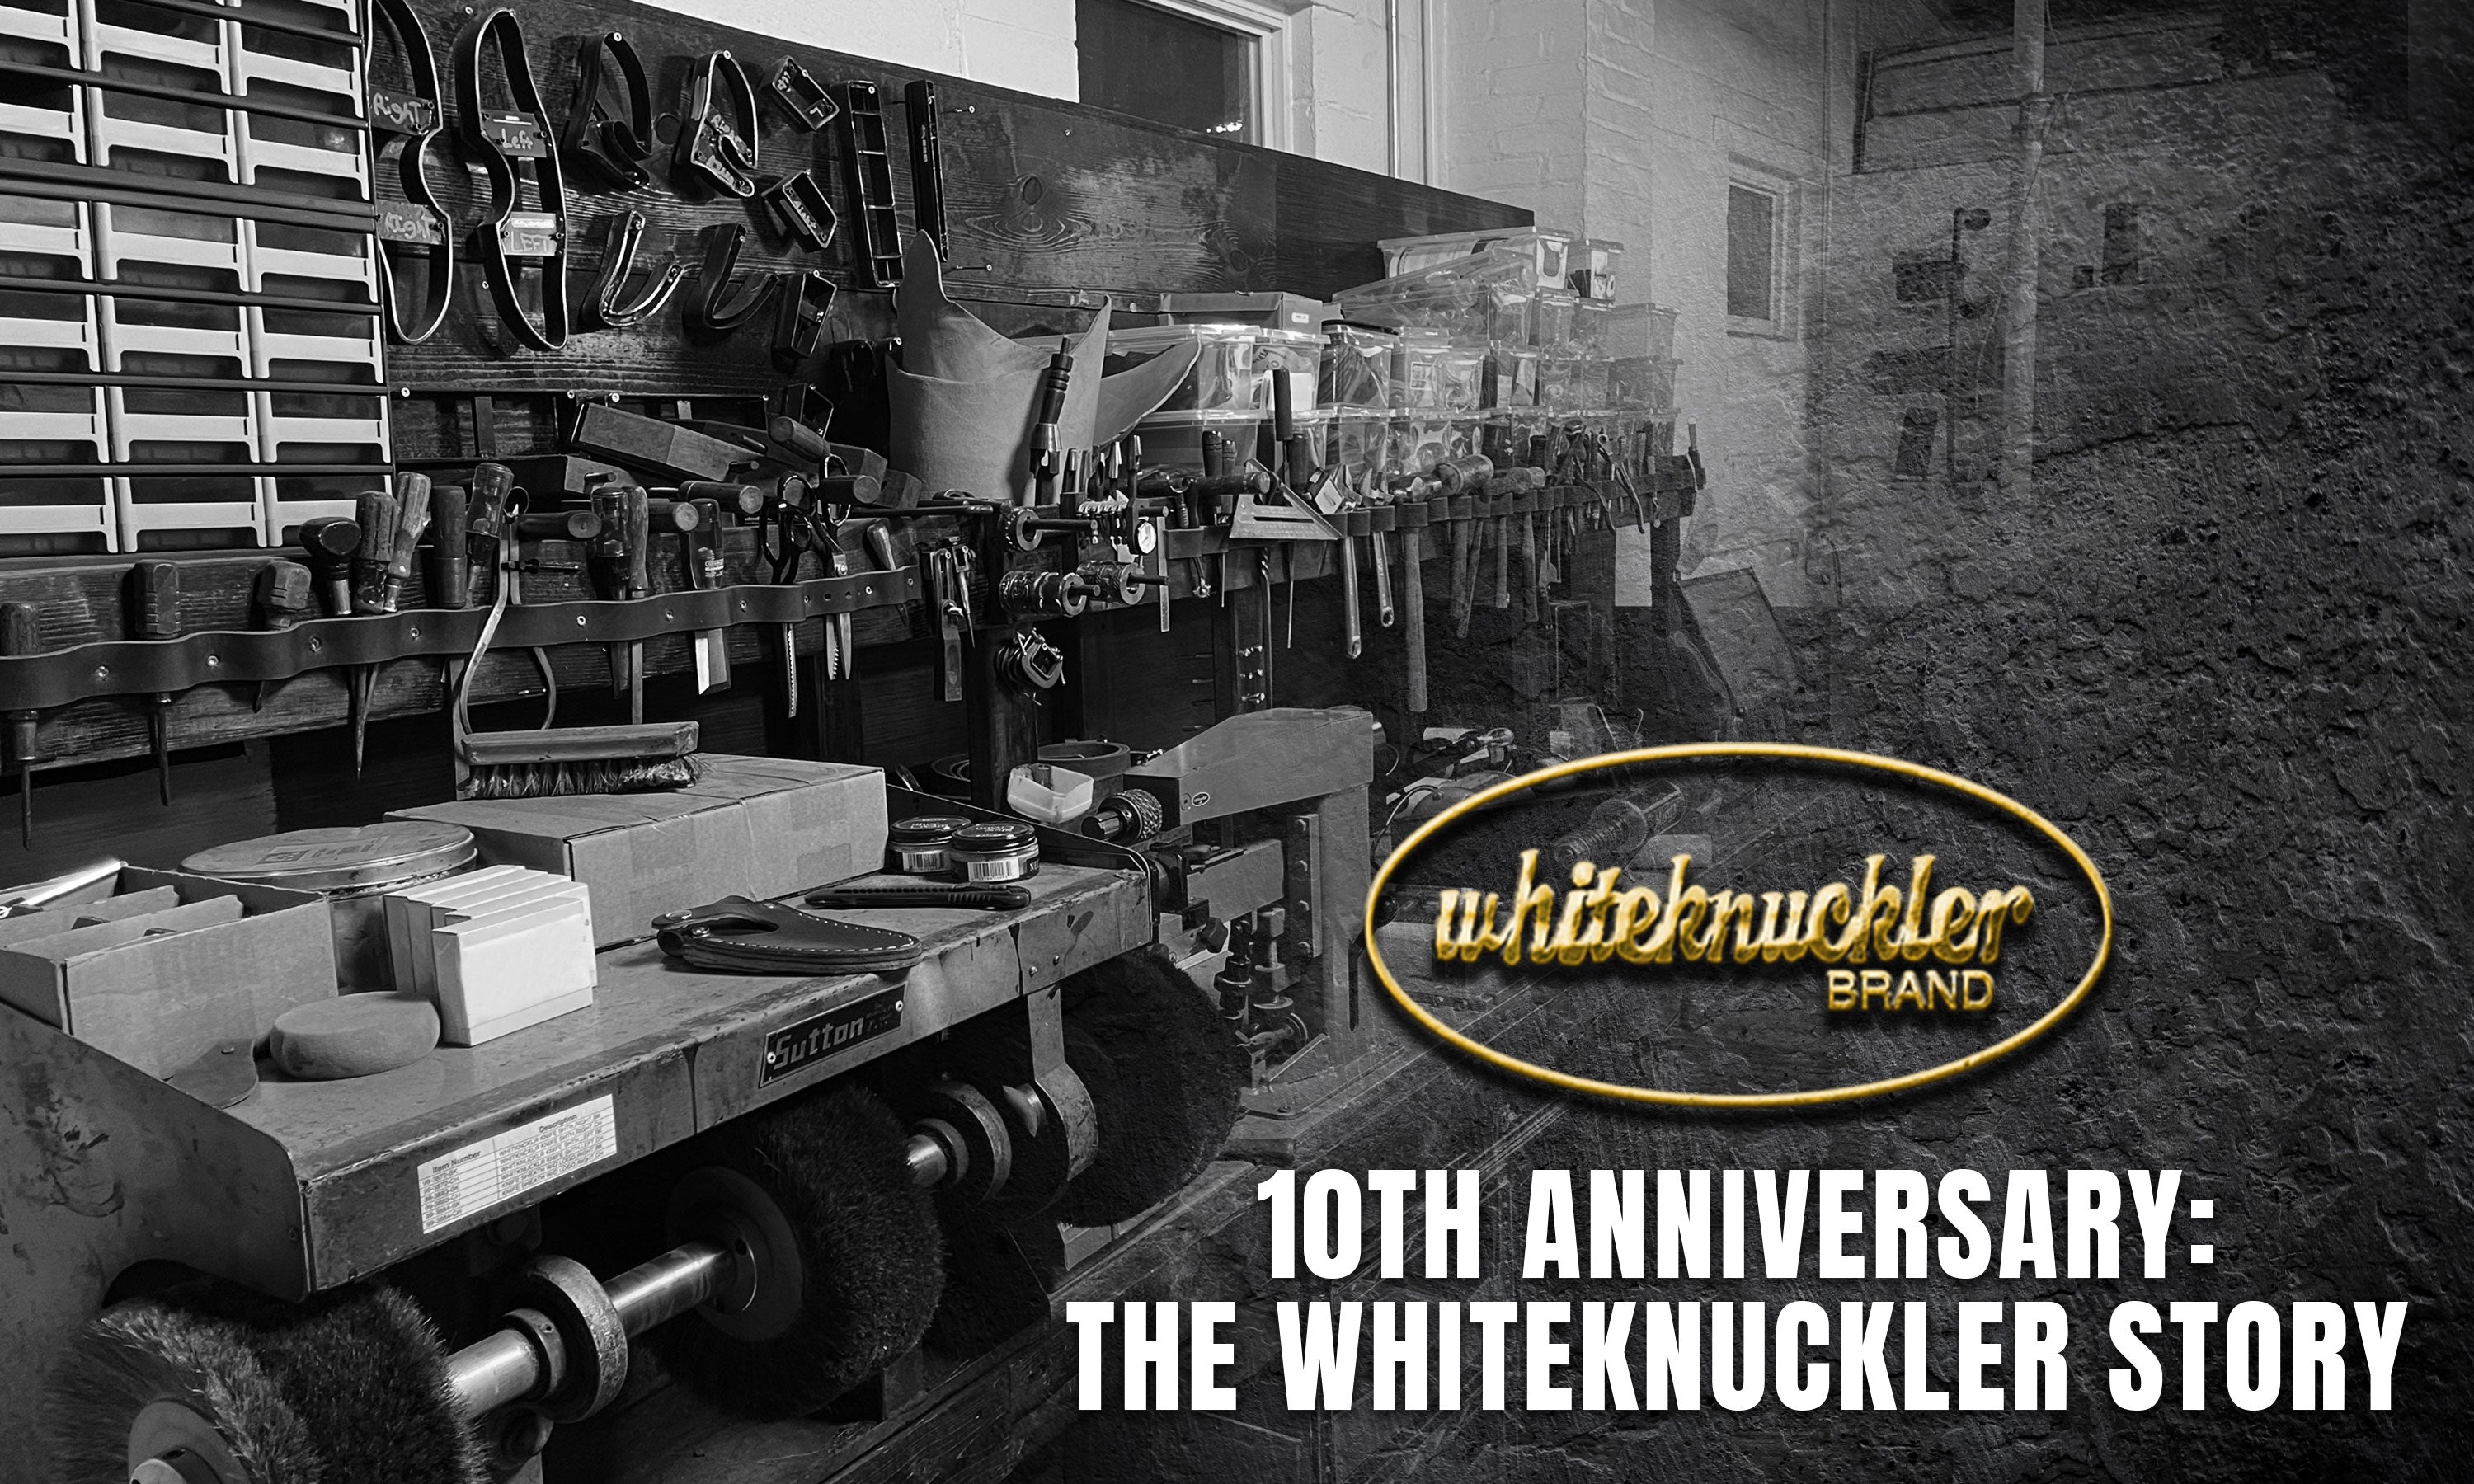 Classic Tool Roll  Whiteknuckler Brand